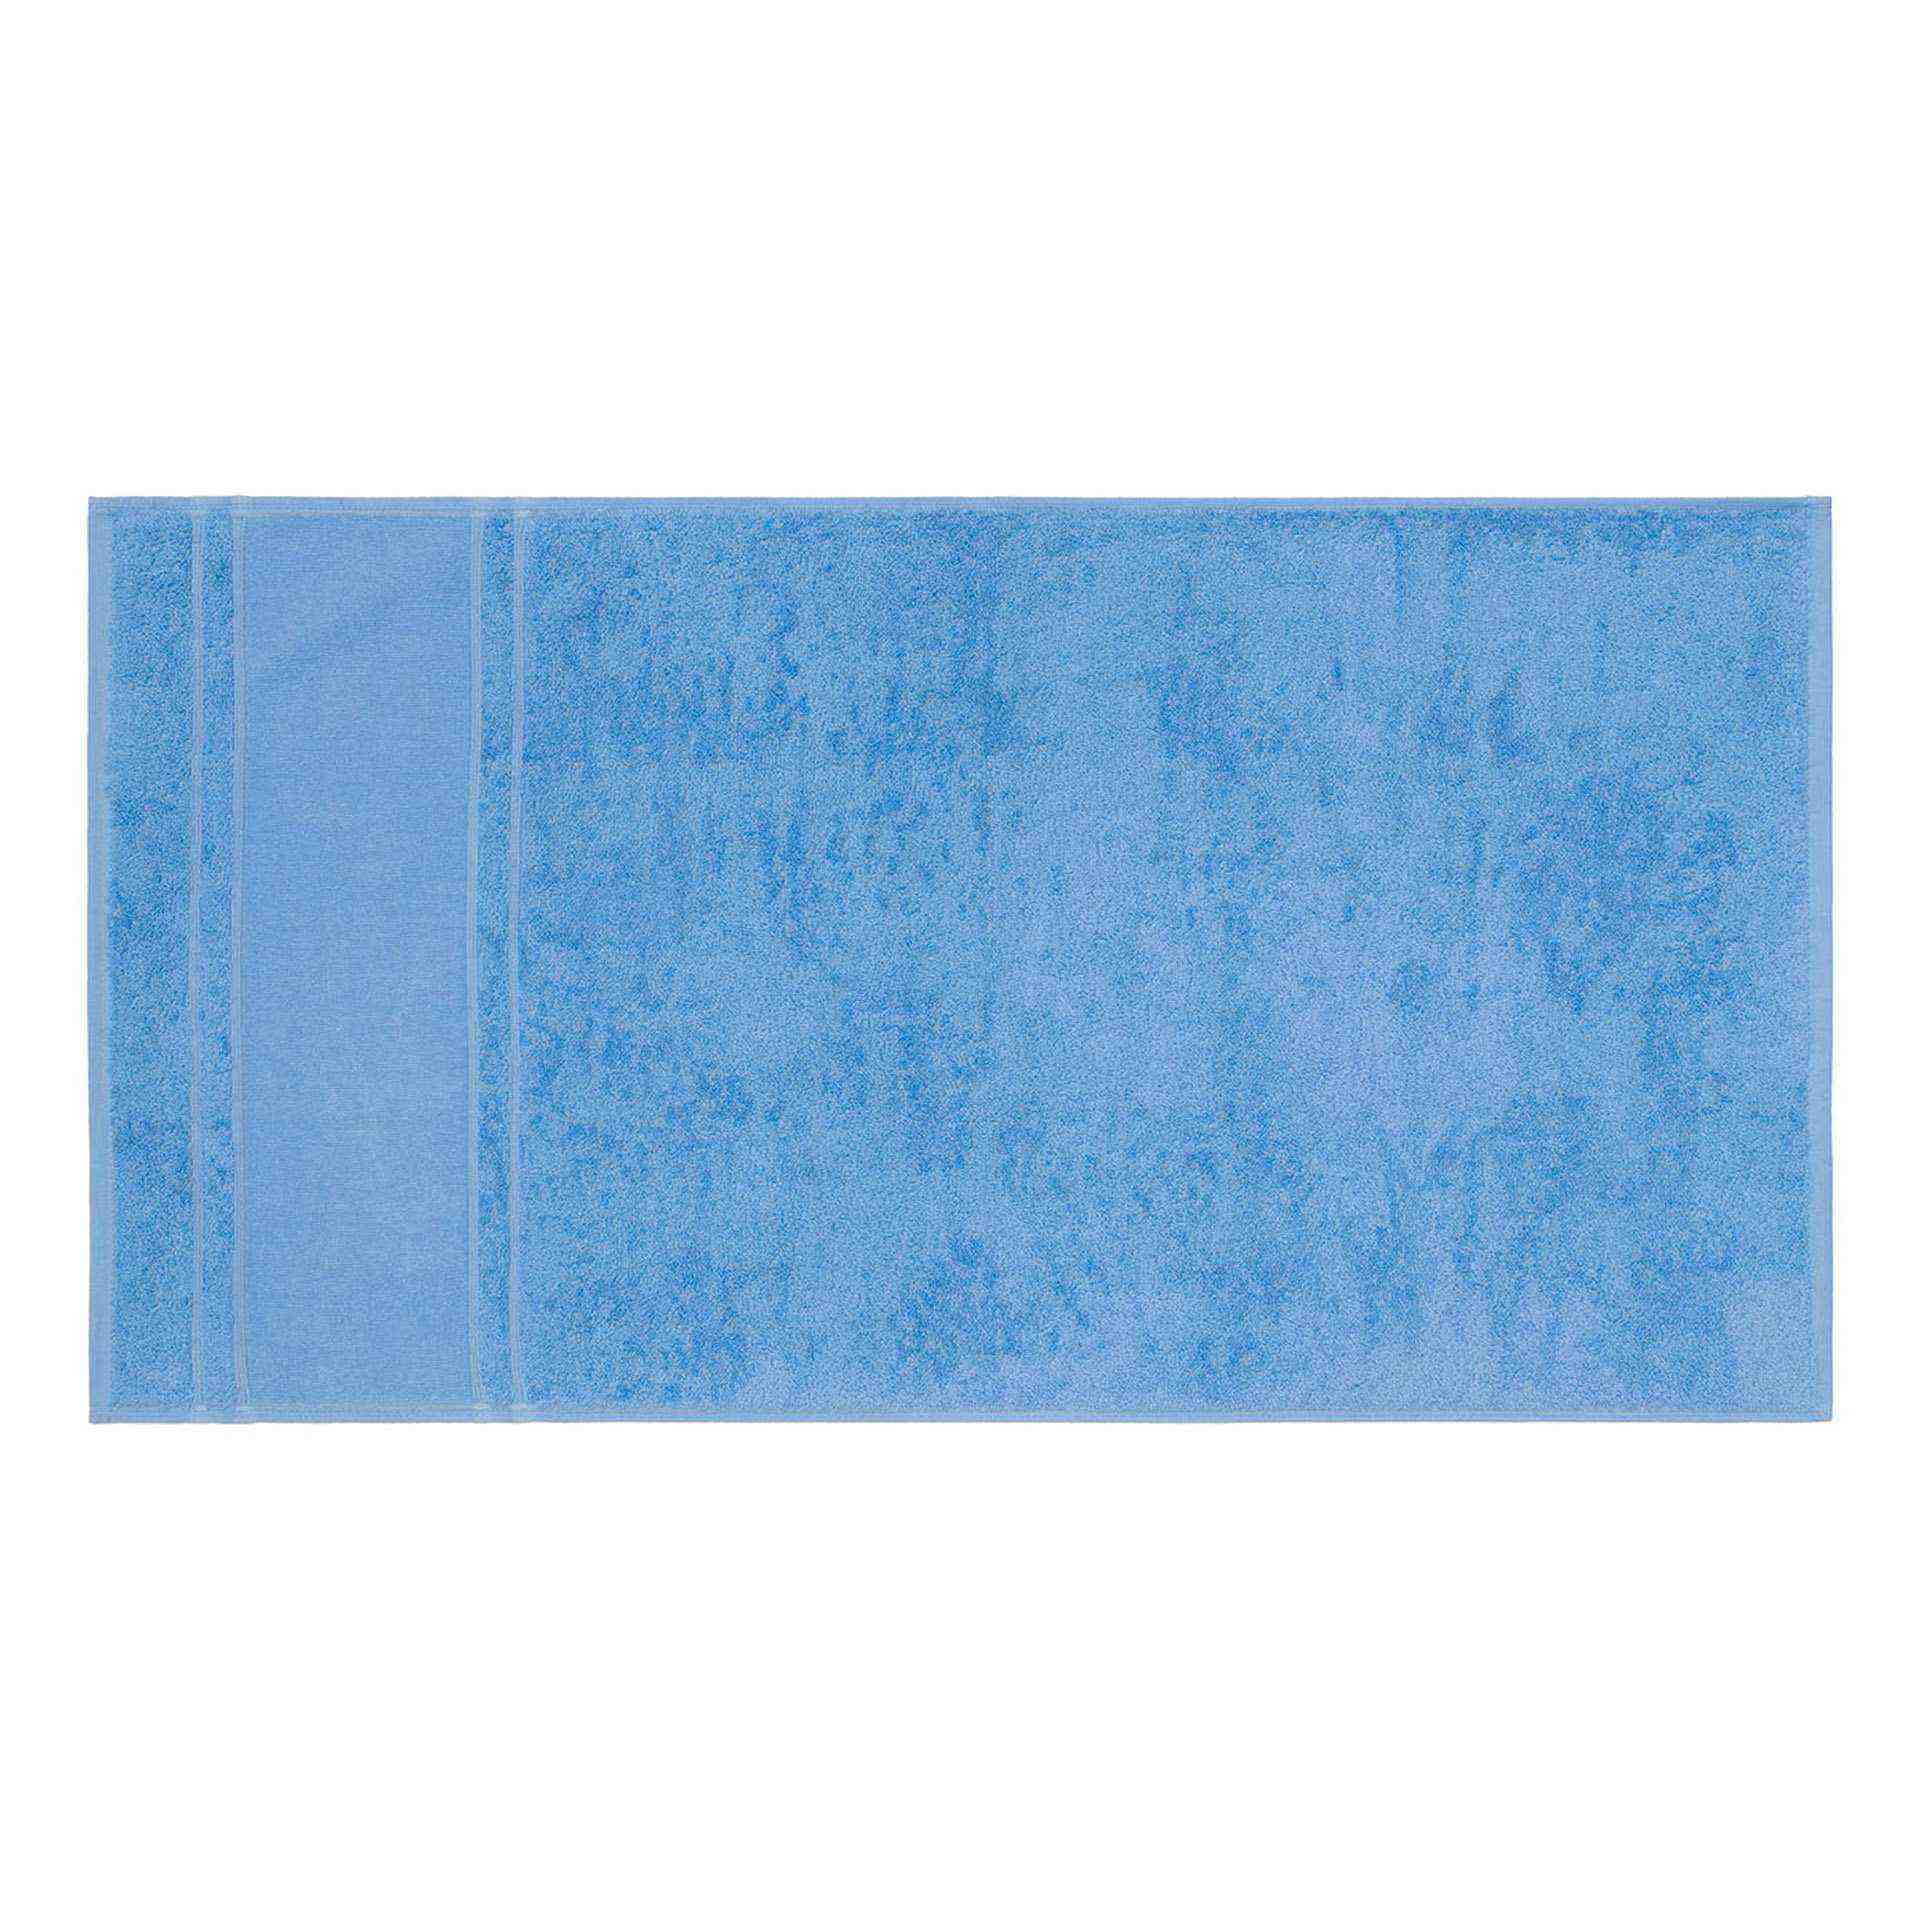 Bade-/ Saunatuch - Serie PORTO - hellblau - Abm. 100 x 180 cm - Baumwolle - 200001-9-57-D